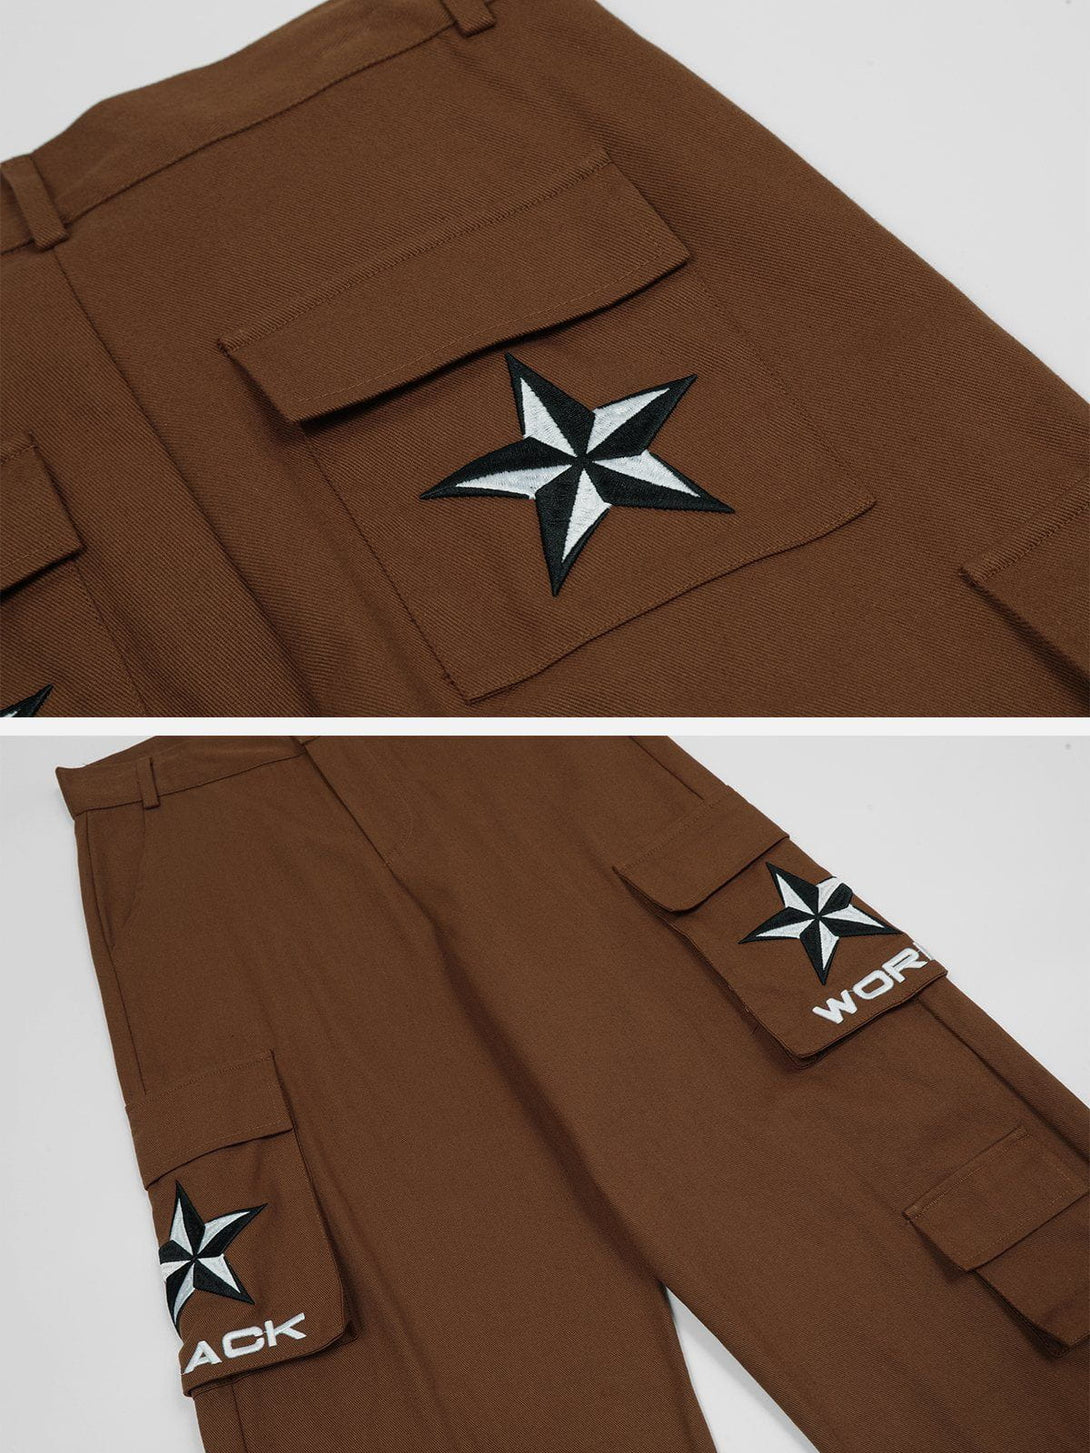 Levefly - Multi-Pocket Pentagram Embroidered Cargo Pants - Streetwear Fashion - levefly.com